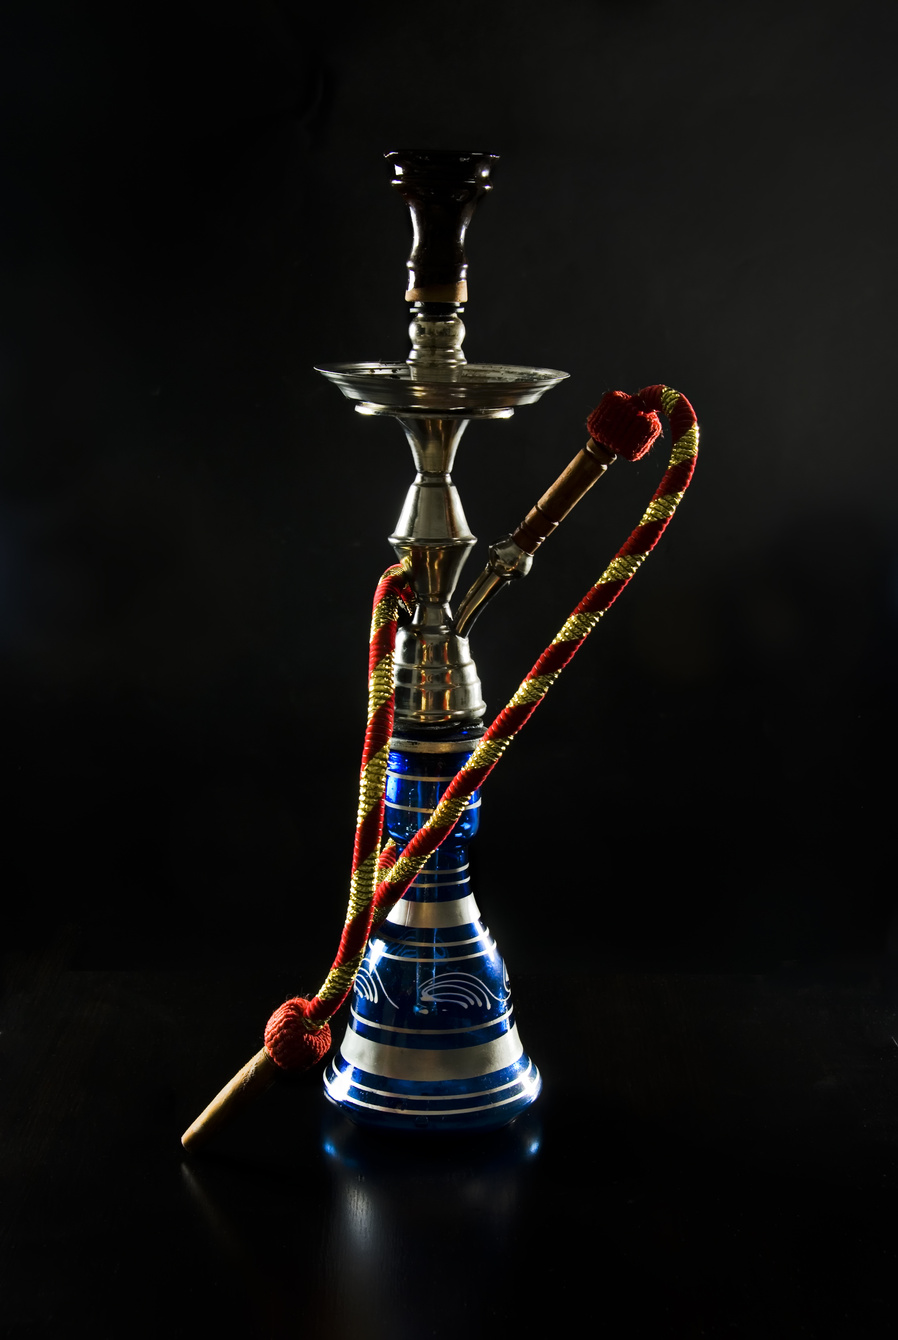 Sheesha pipe on display with dark background